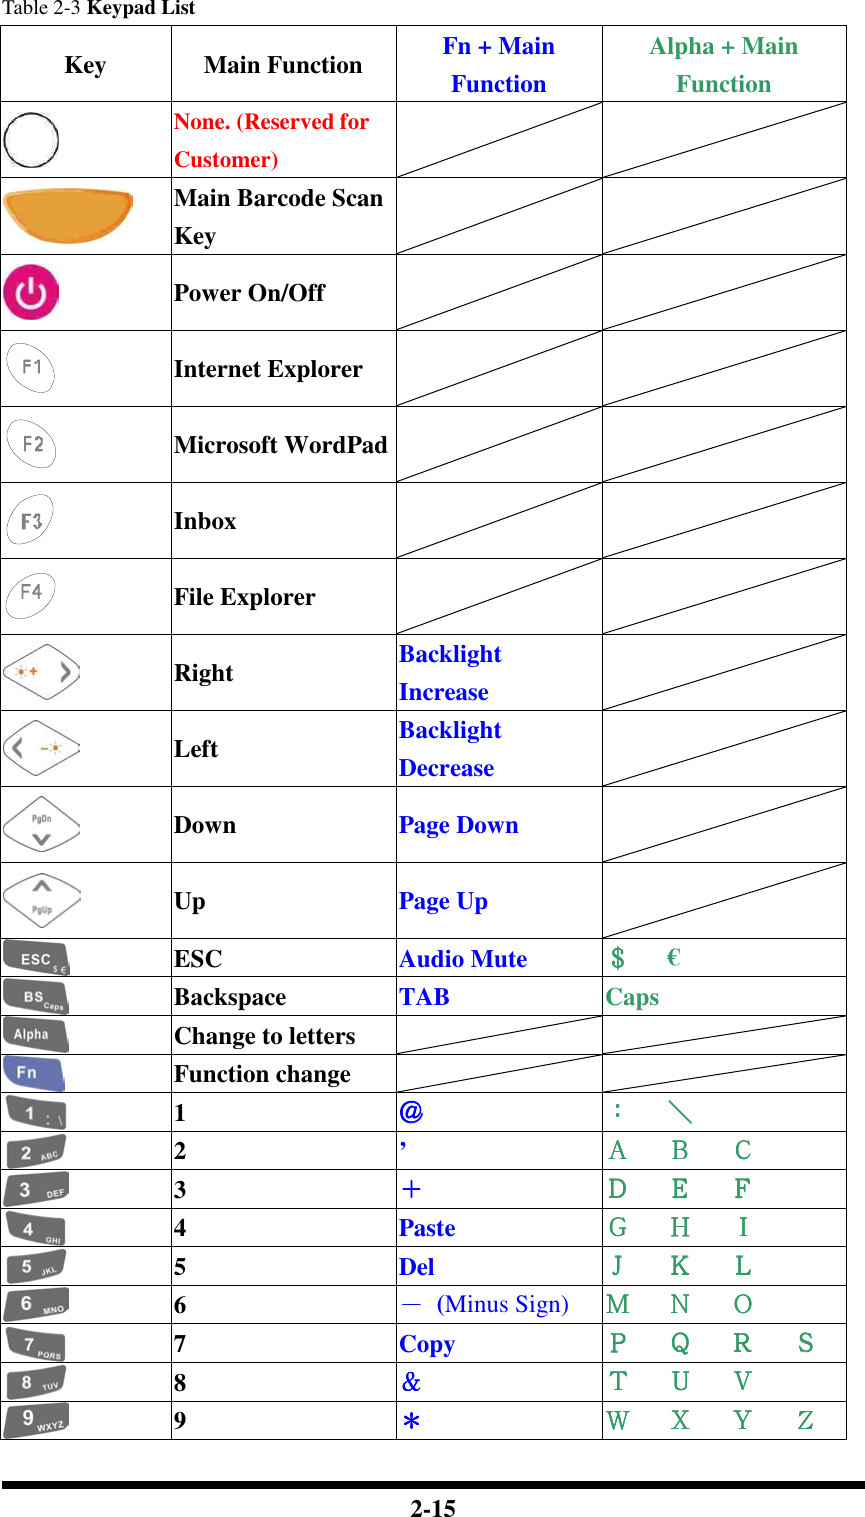  2-15 Table 2-3 Keypad List Key  Main Function  Fn + Main Function Alpha + Main Function  None. (Reserved for Customer)     Main Barcode Scan Key     Power On/Off     Internet Explorer     Microsoft WordPad    Inbox     File Explorer     Right  Backlight   Increase    Left  Backlight Decrease    Down  Page Down    Up  Page Up    ESC  Audio Mute  ＄＄＄＄      €  Backspace  TAB  Caps  Change to letters     Function change     1  ＠＠＠＠ ：：：：     ＼＼＼＼  2  ’  ＡＡＡＡ     ＢＢＢＢ     ＣＣＣＣ  3  ＋＋＋＋ ＤＤＤＤ     ＥＥＥＥ     ＦＦＦＦ  4  Paste  ＧＧＧＧ     ＨＨＨＨ     ＩＩＩＩ  5  Del  ＪＪＪＪ     ＫＫＫＫ     ＬＬＬＬ  6  －－－－  (Minus Sign) ＭＭＭＭ     ＮＮＮＮ     ＯＯＯＯ  7  Copy  ＰＰＰＰ     ＱＱＱＱ     ＲＲＲＲ     ＳＳＳＳ  8  ＆＆＆＆ ＴＴＴＴ     ＵＵＵＵ     ＶＶＶＶ  9  ＊＊＊＊ ＷＷＷＷ     ＸＸＸＸ     ＹＹＹＹ     ＺＺＺＺ 